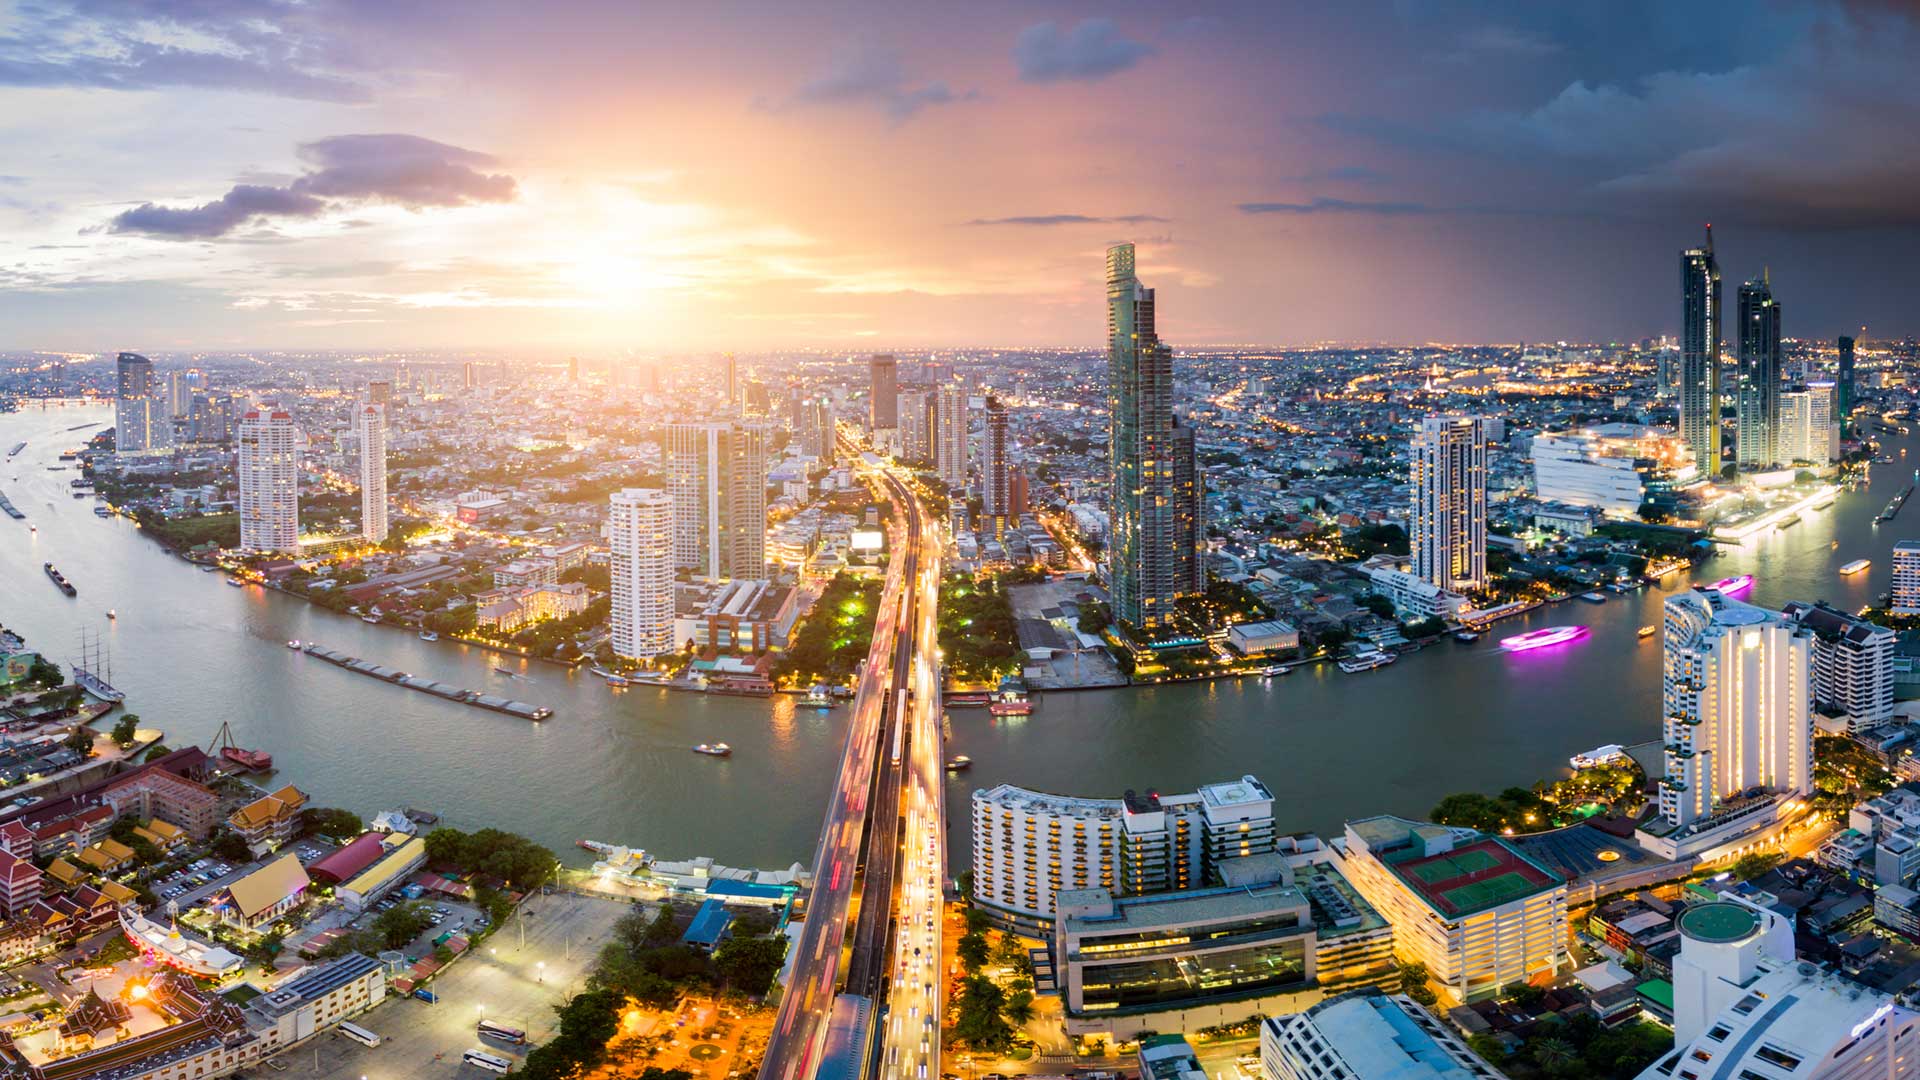 Serial view Bangkok skyline